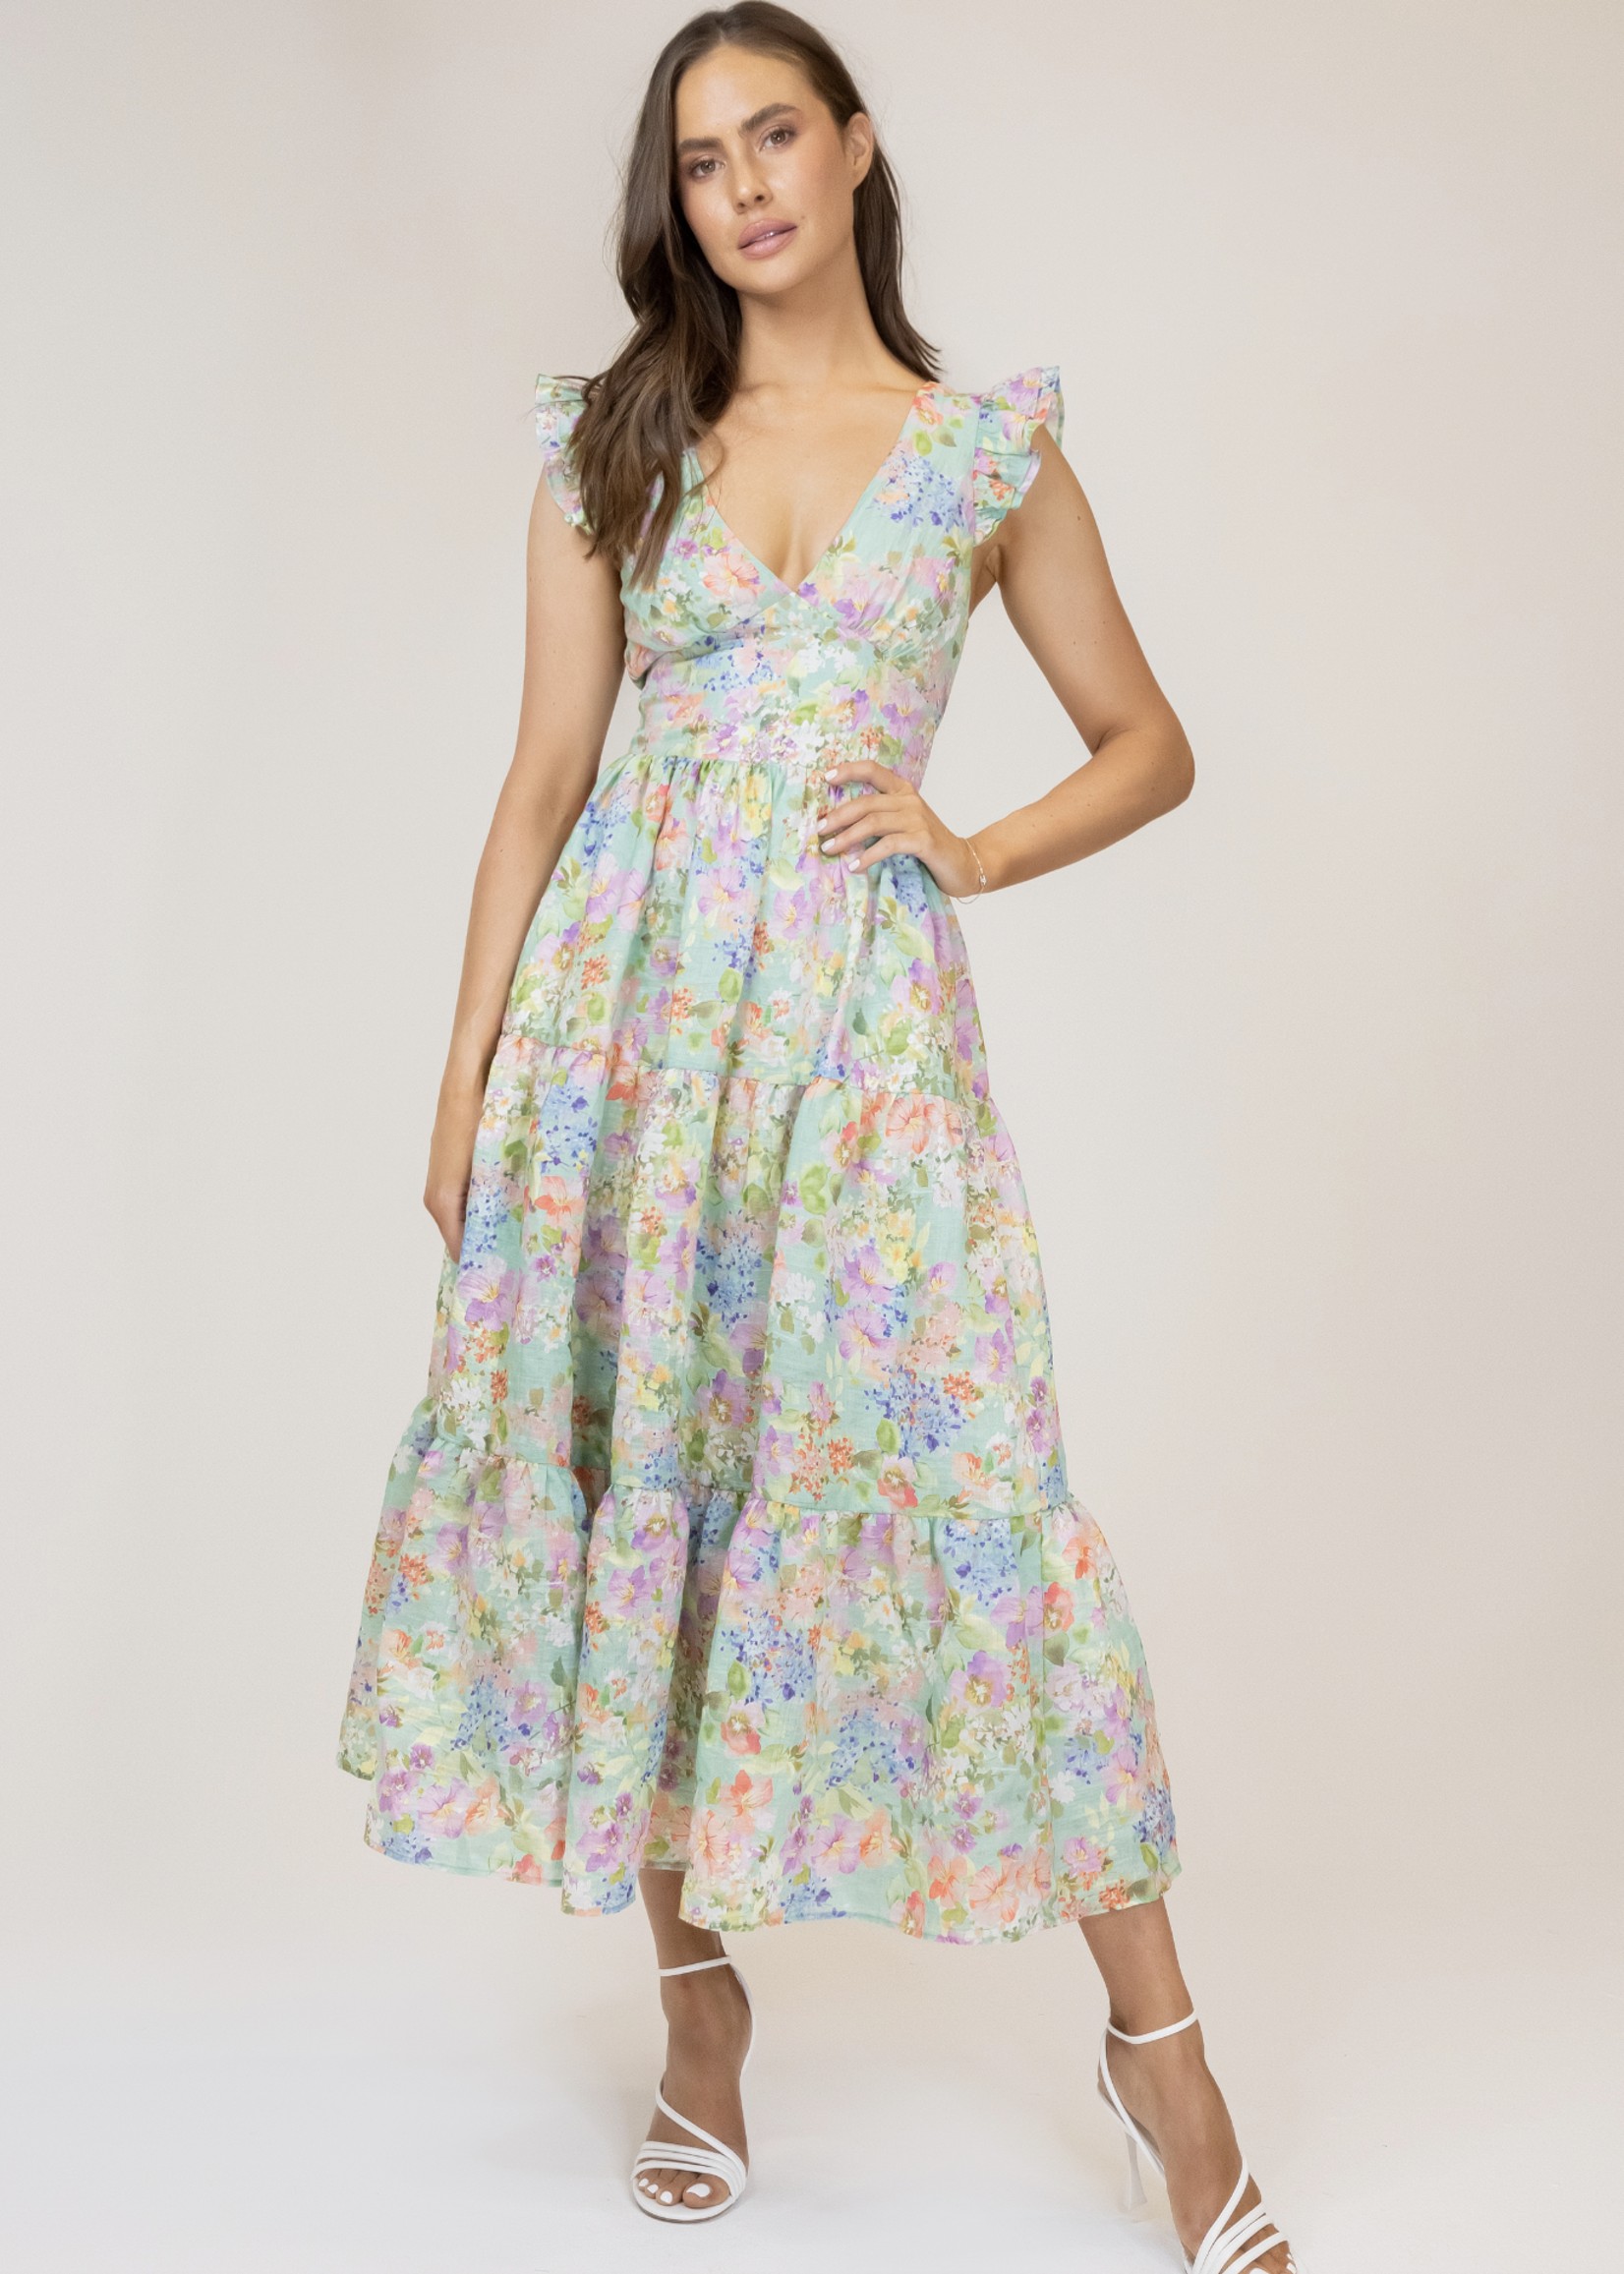 Elitaire Boutique Alaia Maxi Dress in Sage